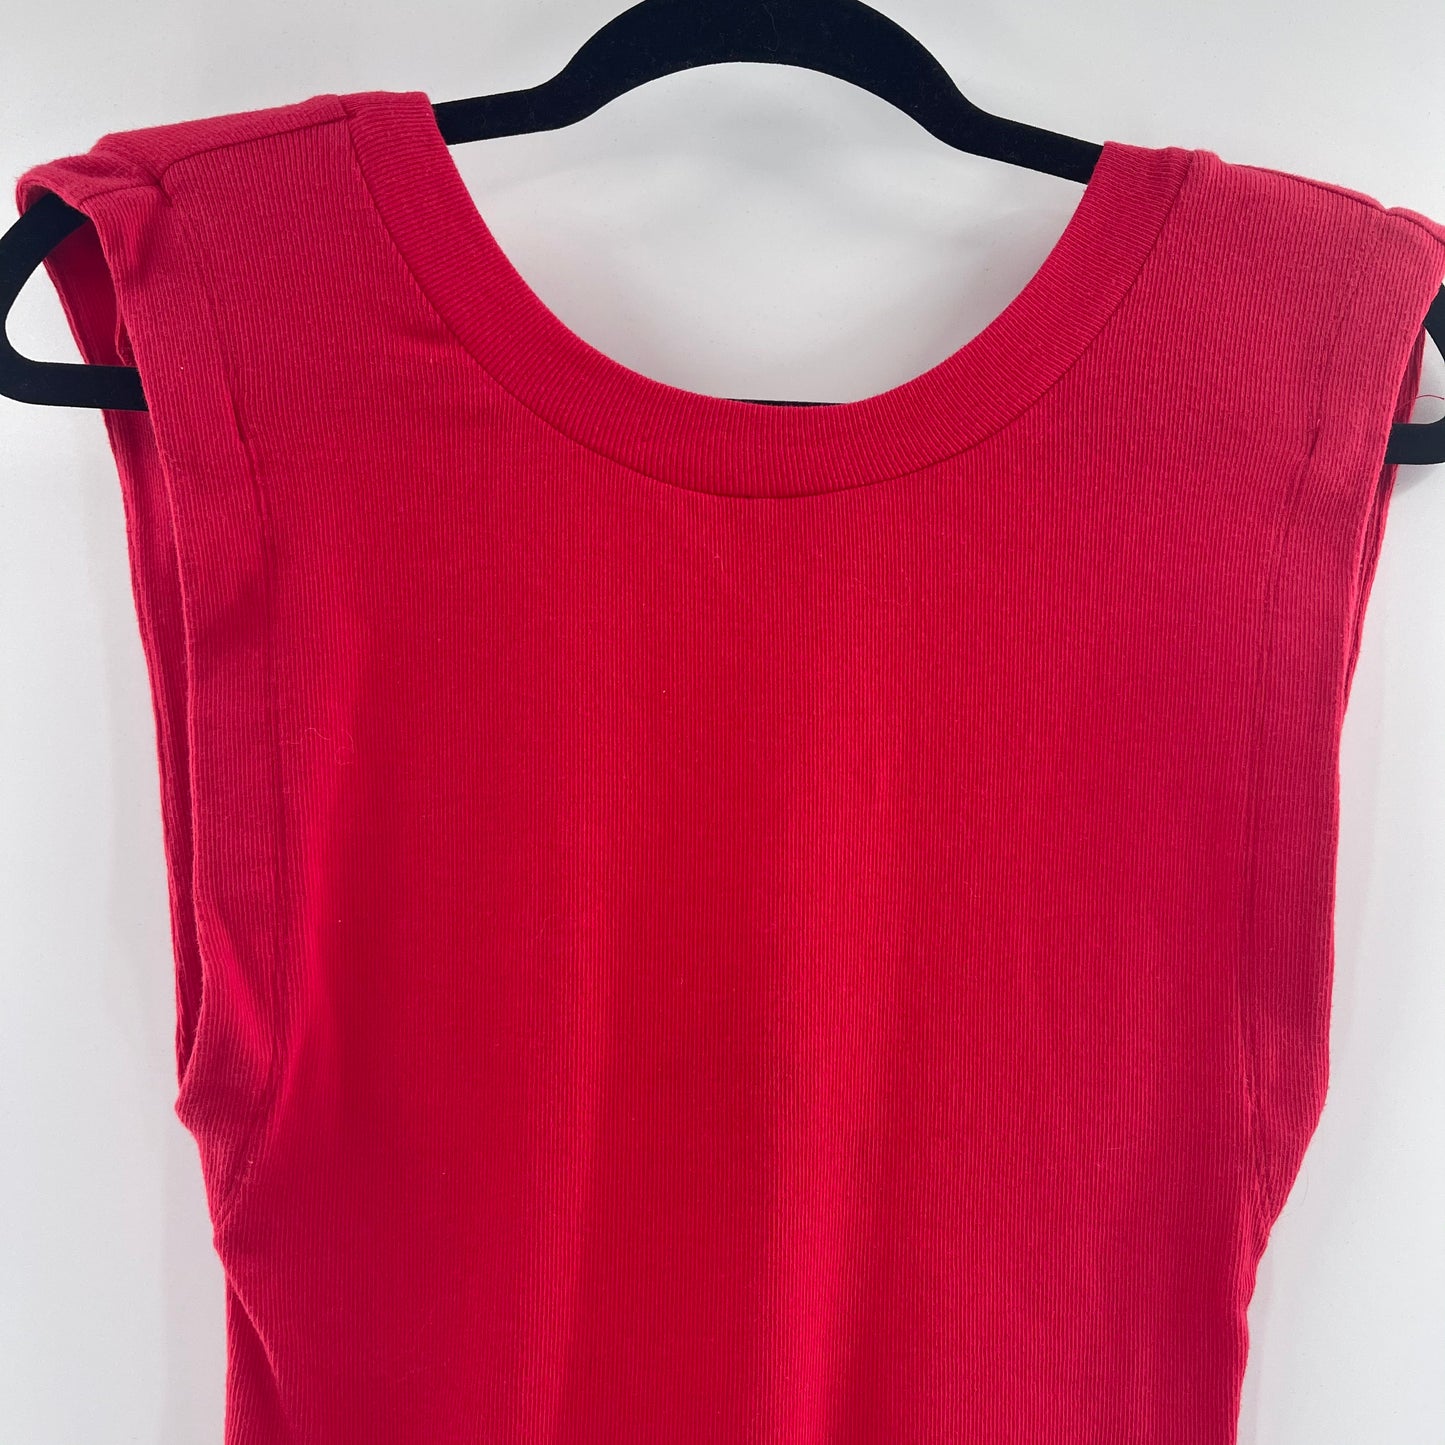 Intimately Free People “U” Shape Collar Red Bodysuit (Size XS)